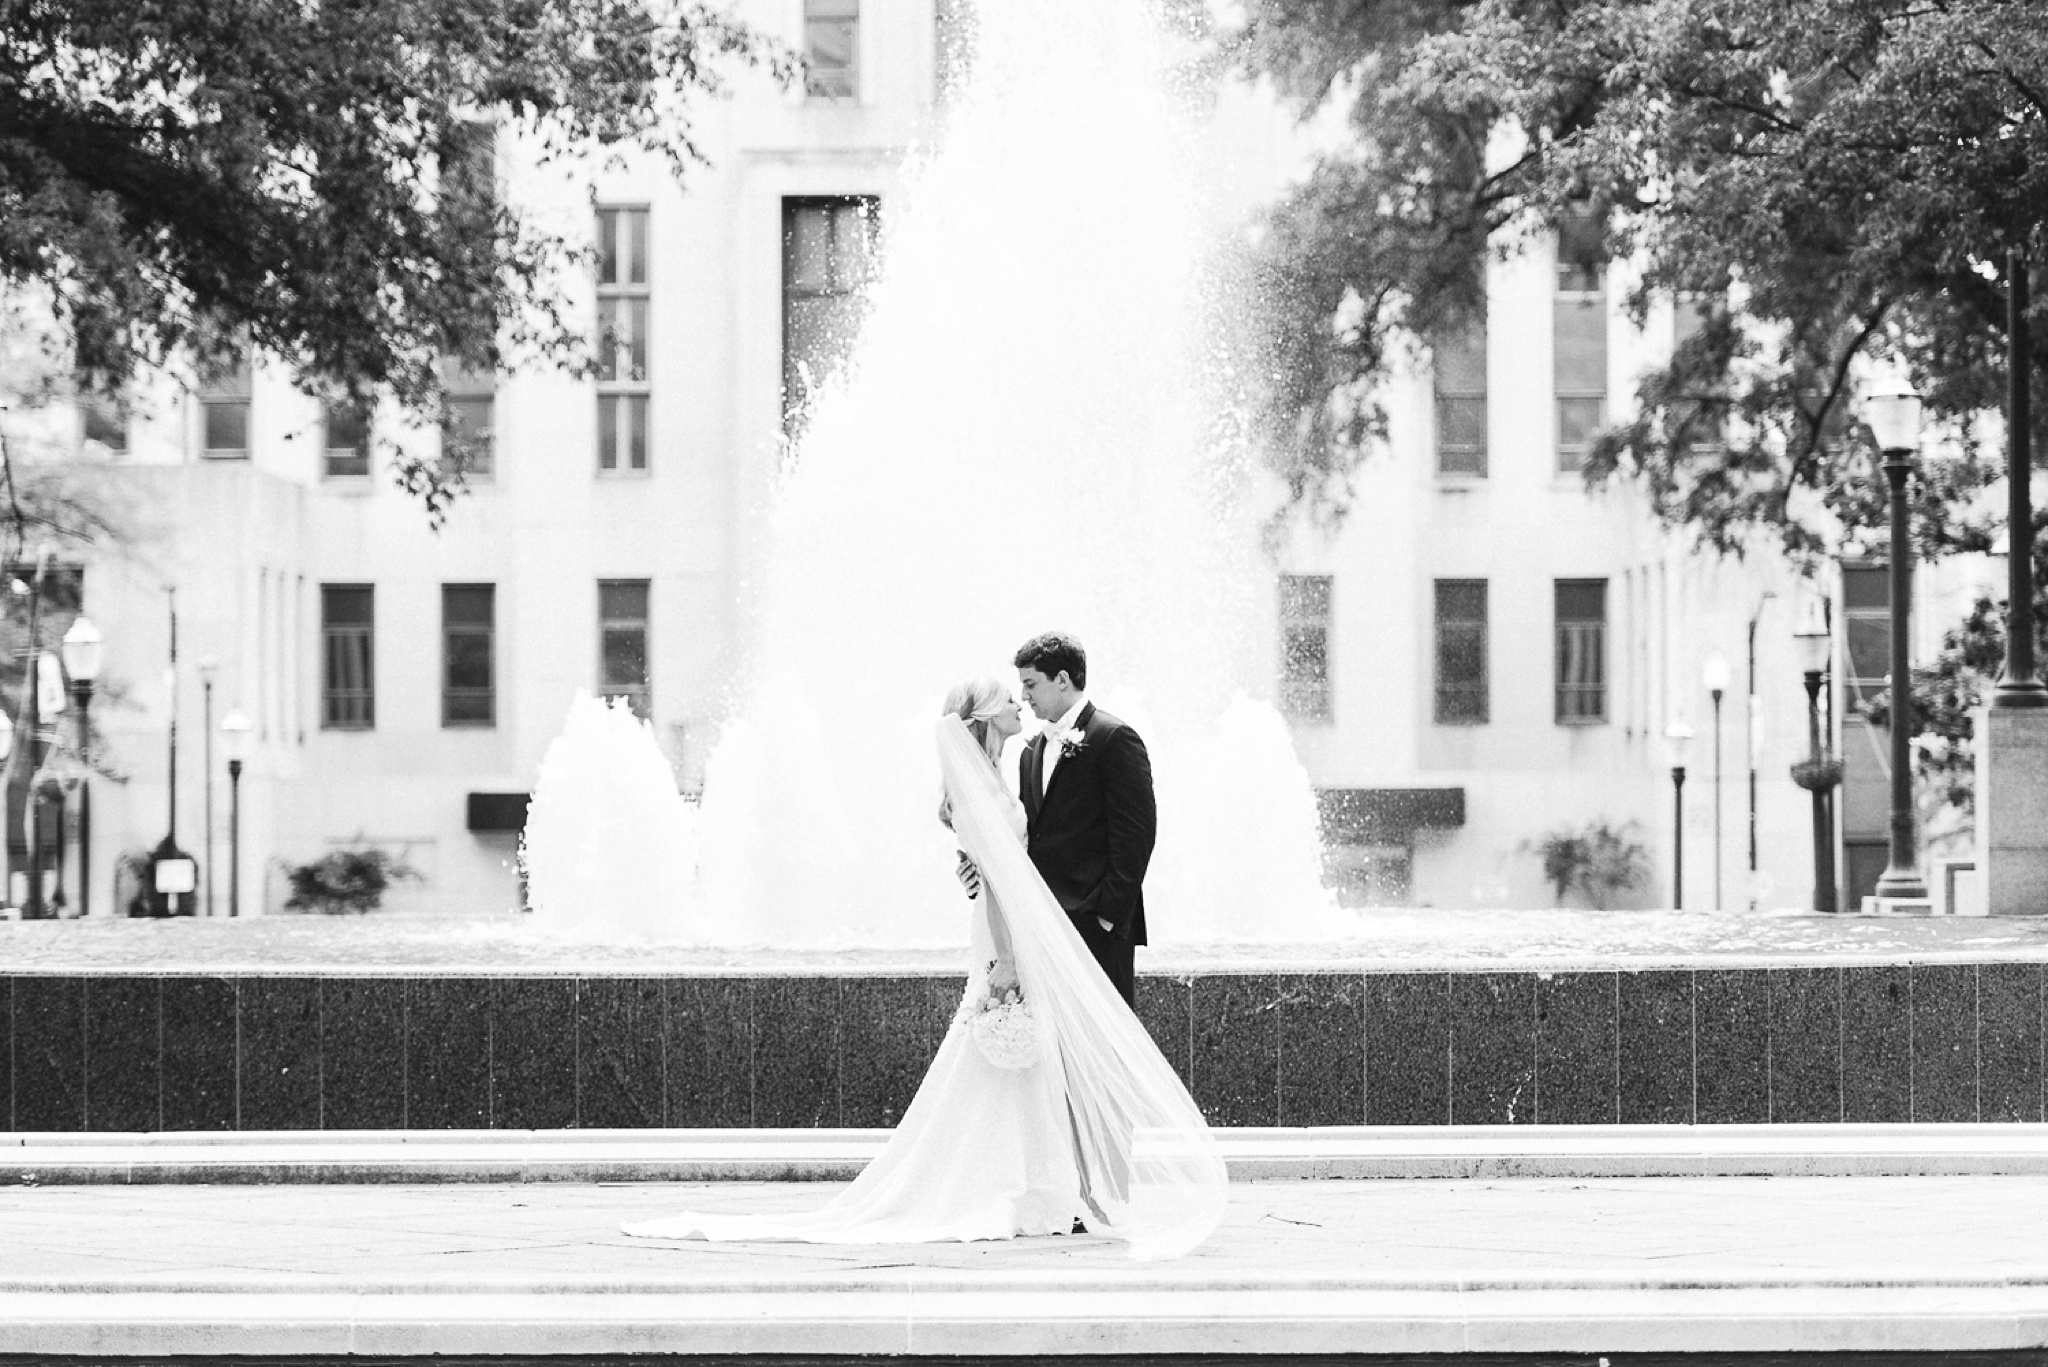 Downtown Birmingham Haven Tutwiler Riverchase Wedding Day | Birmingham Alabama Wedding Photographers_0027.jpg